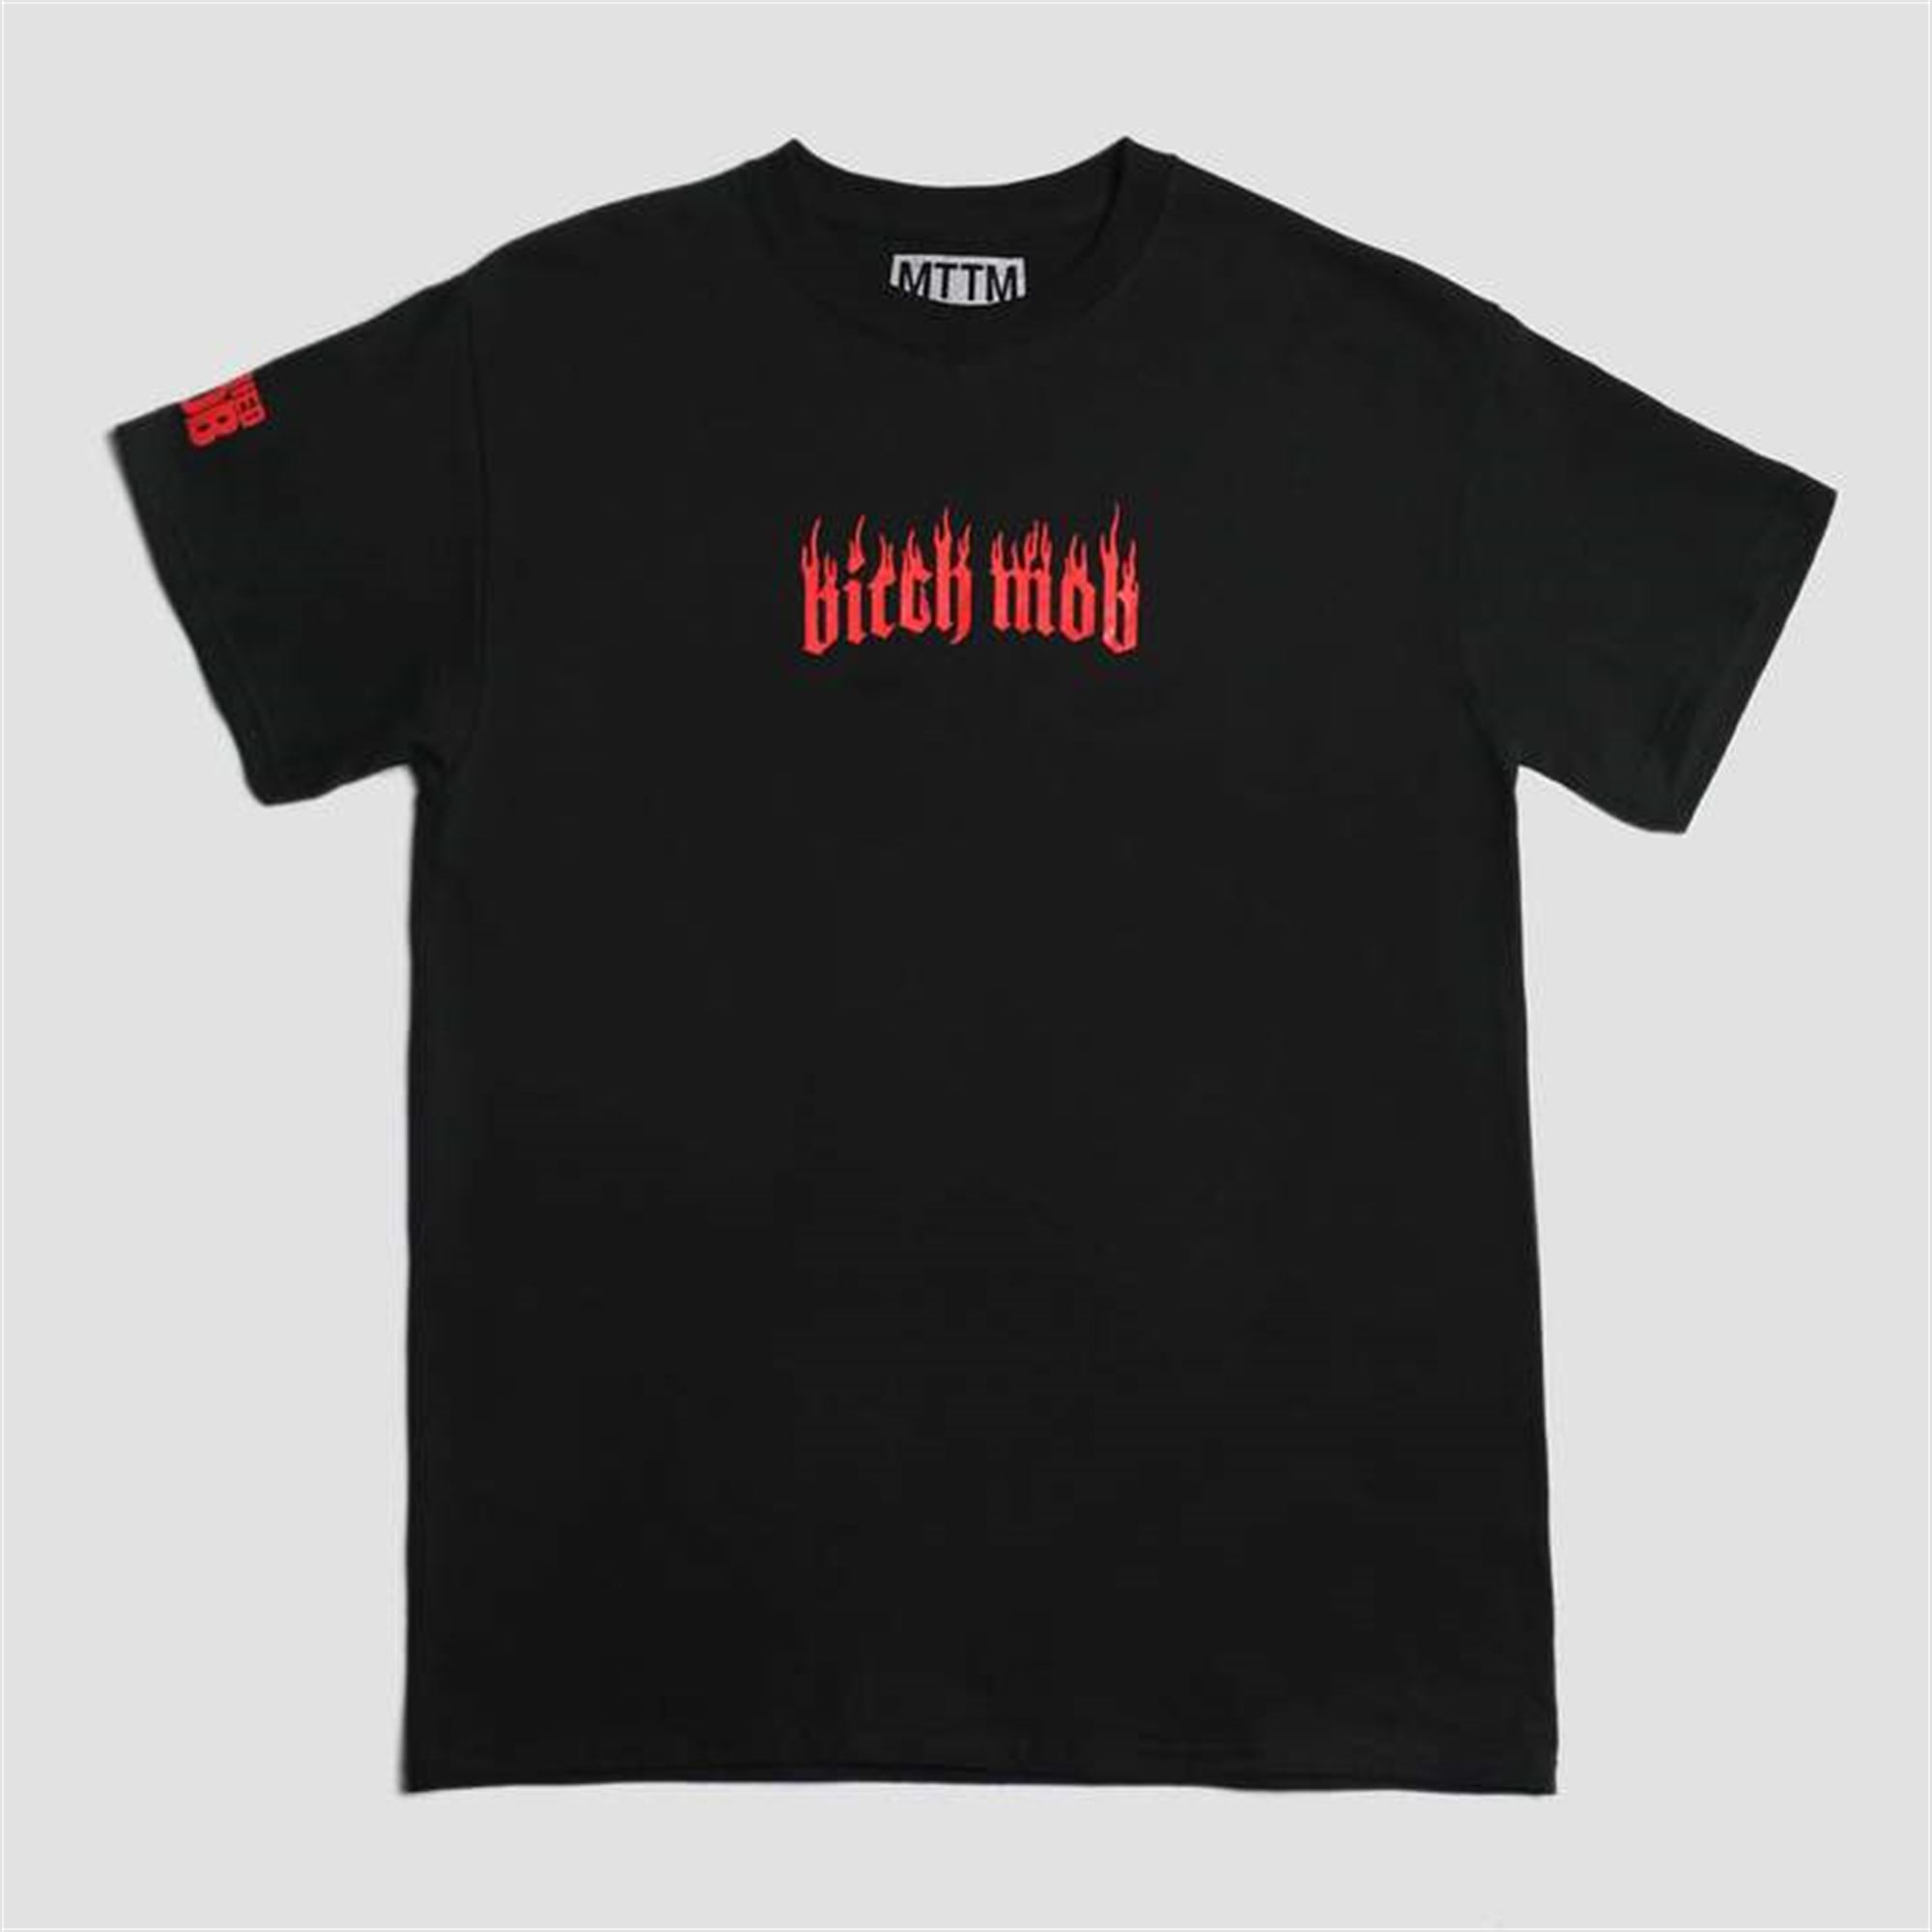 Bitch Mob Flames Black T-shirt Size Up To 5xl